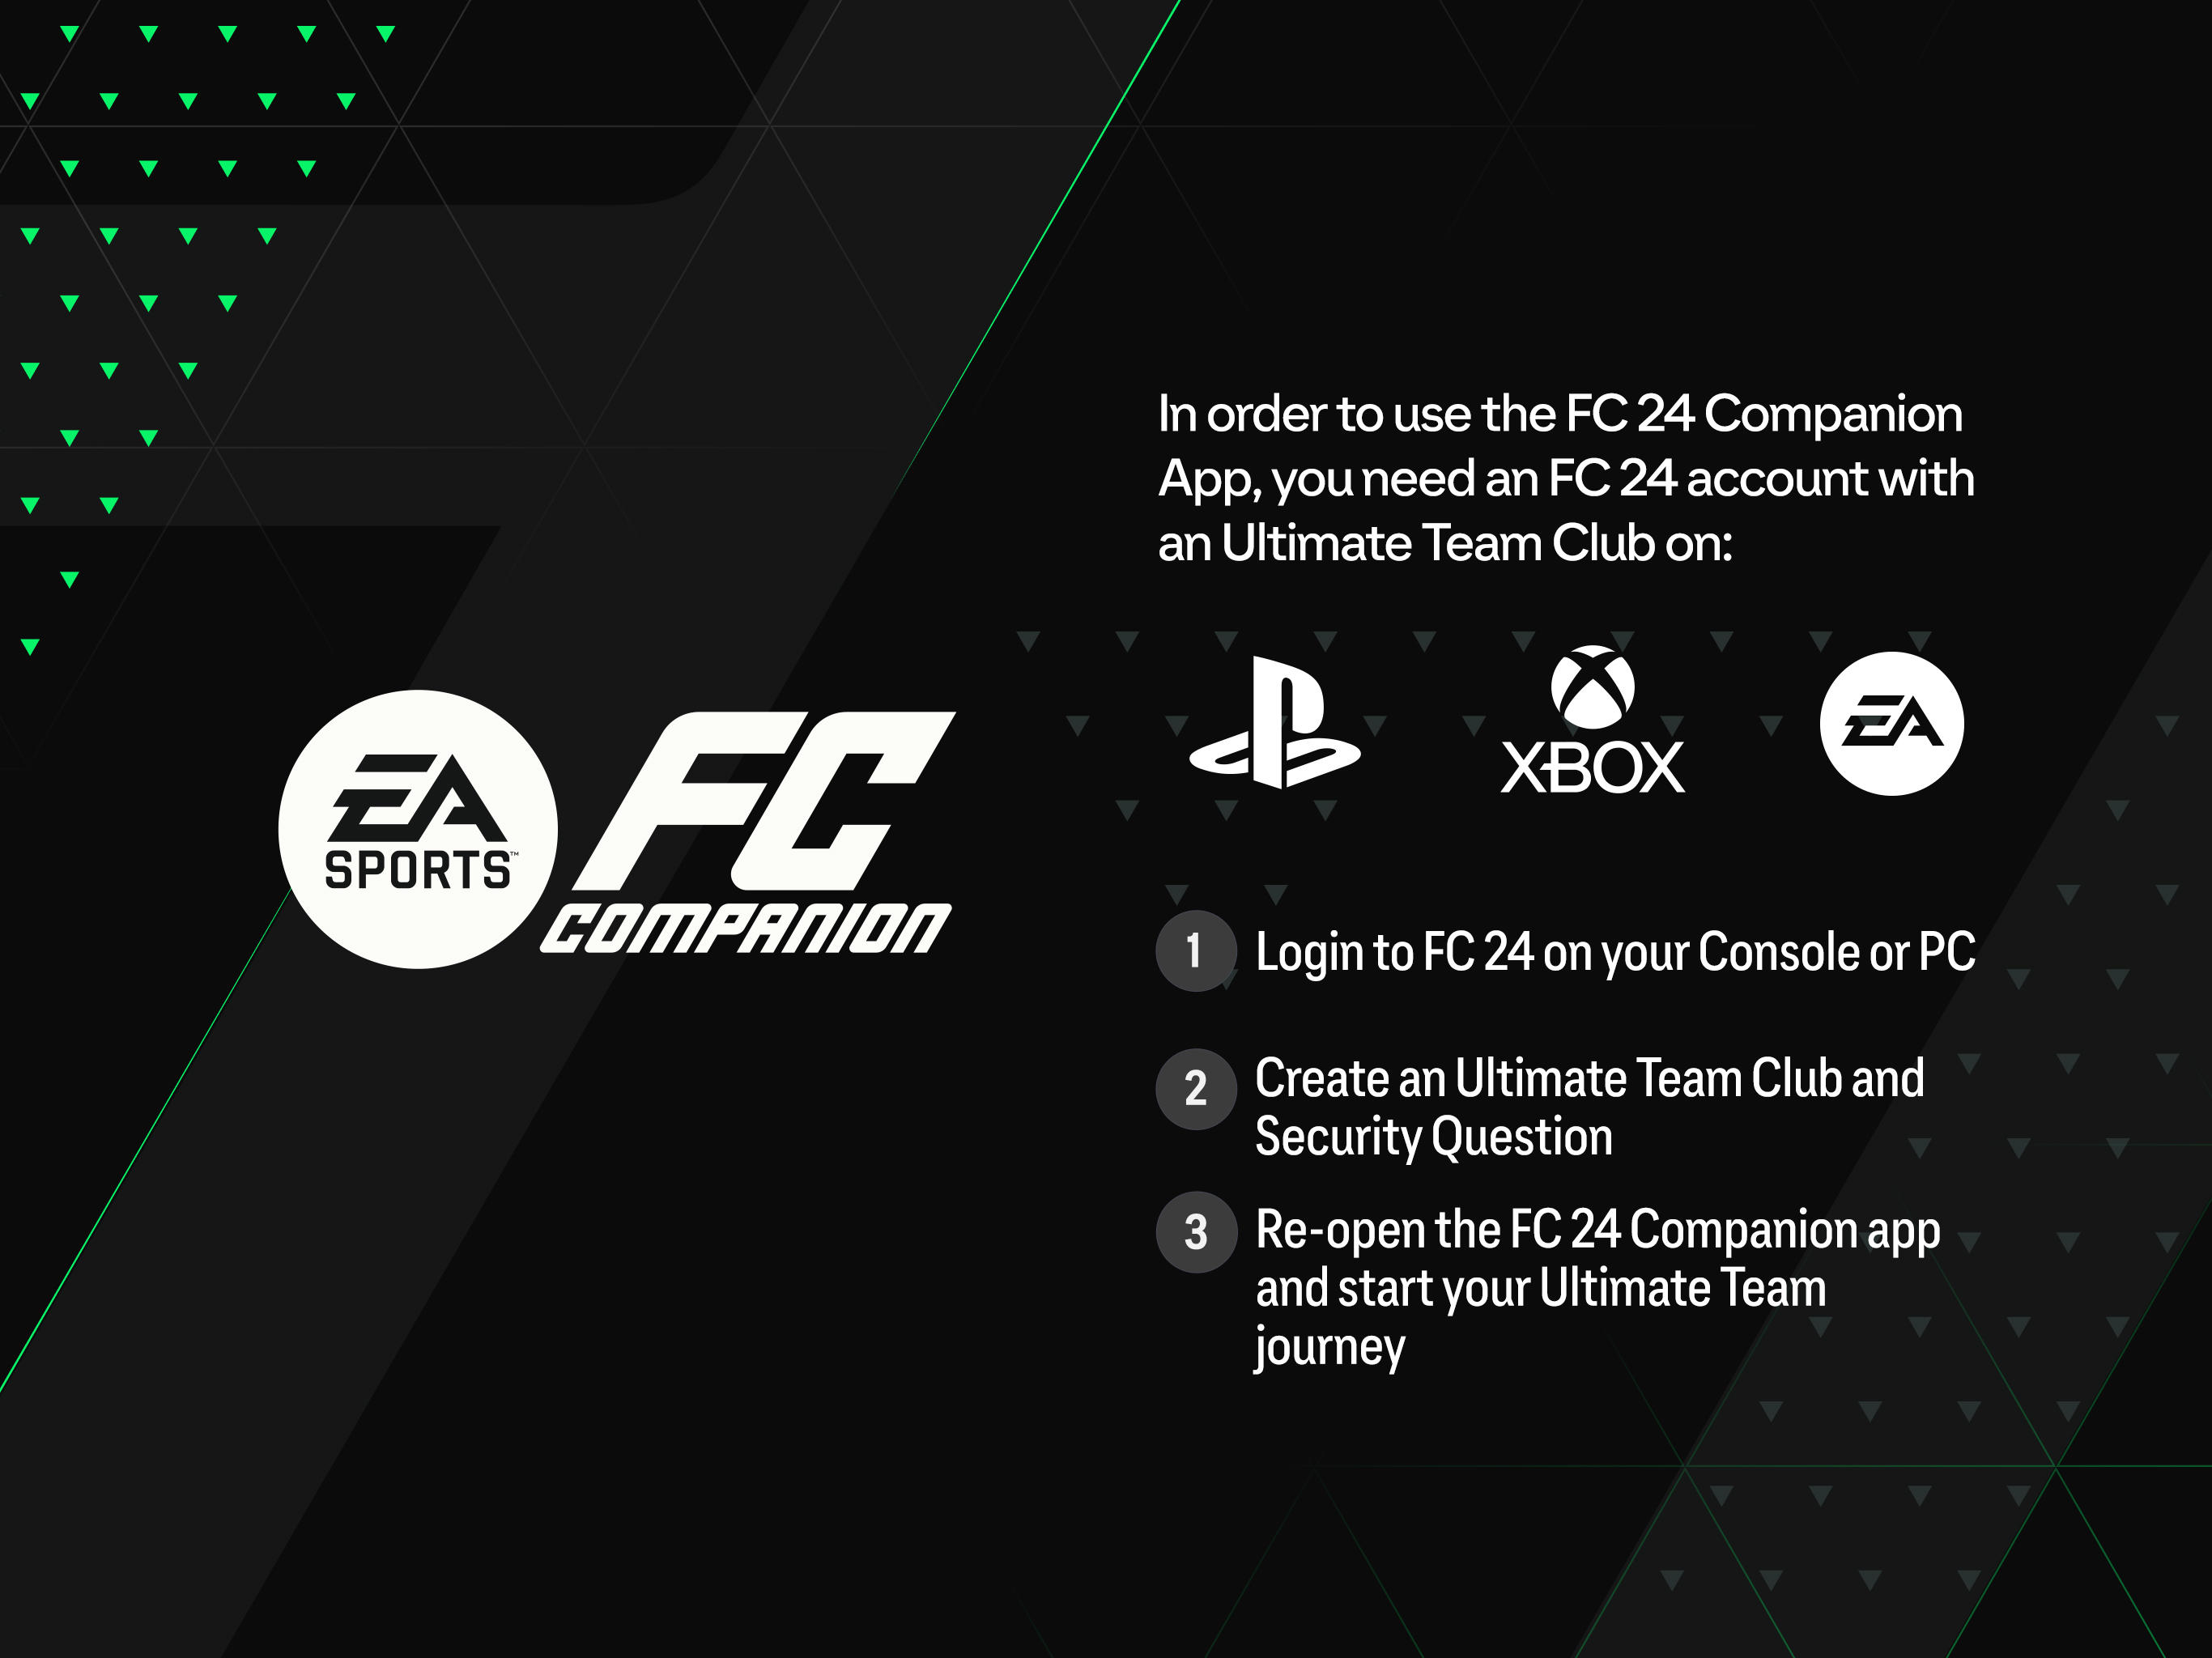 EA SPORTS™ FIFA 16 Companion APK for Android Download